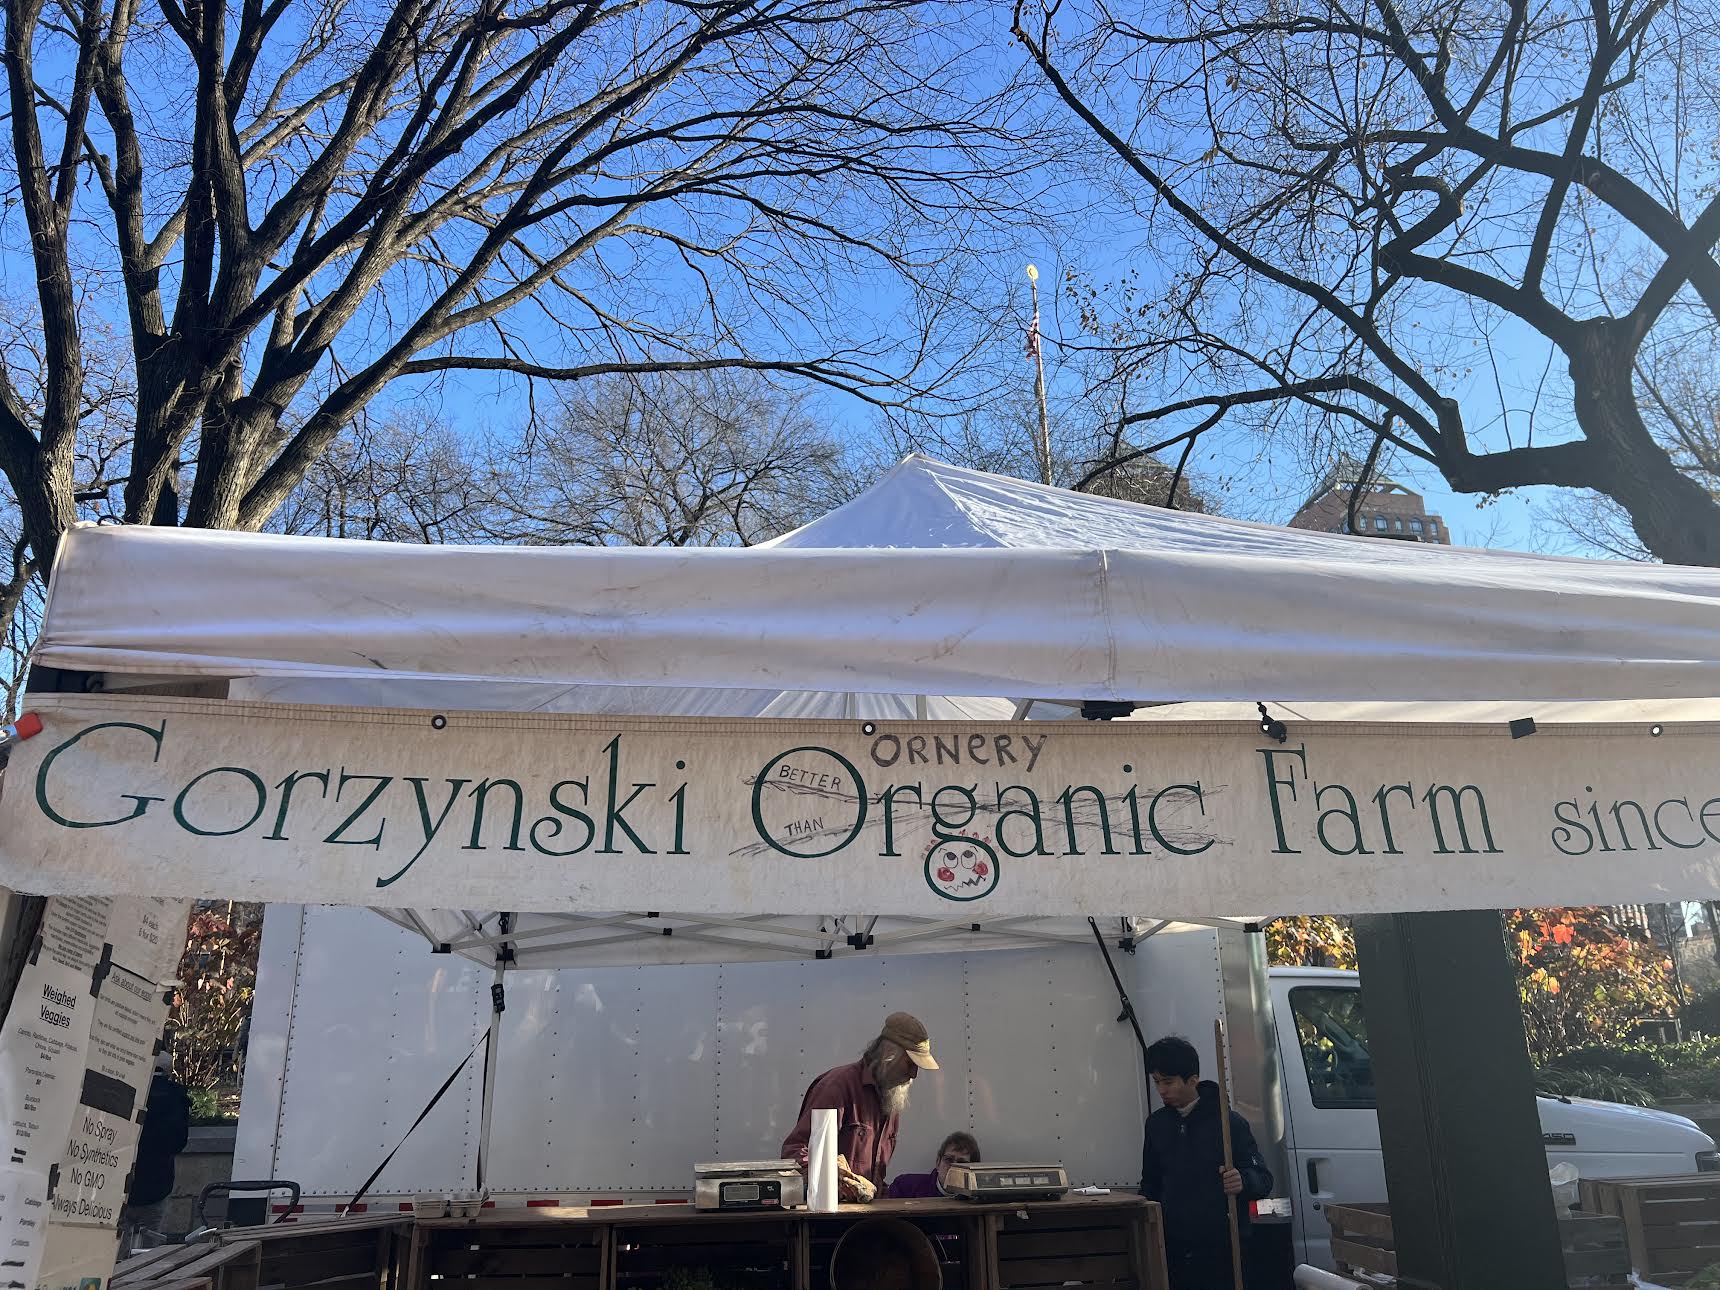 Gorzynski Ornery Farm Stand, Union Square.(Credit: Jillian Magtoto)